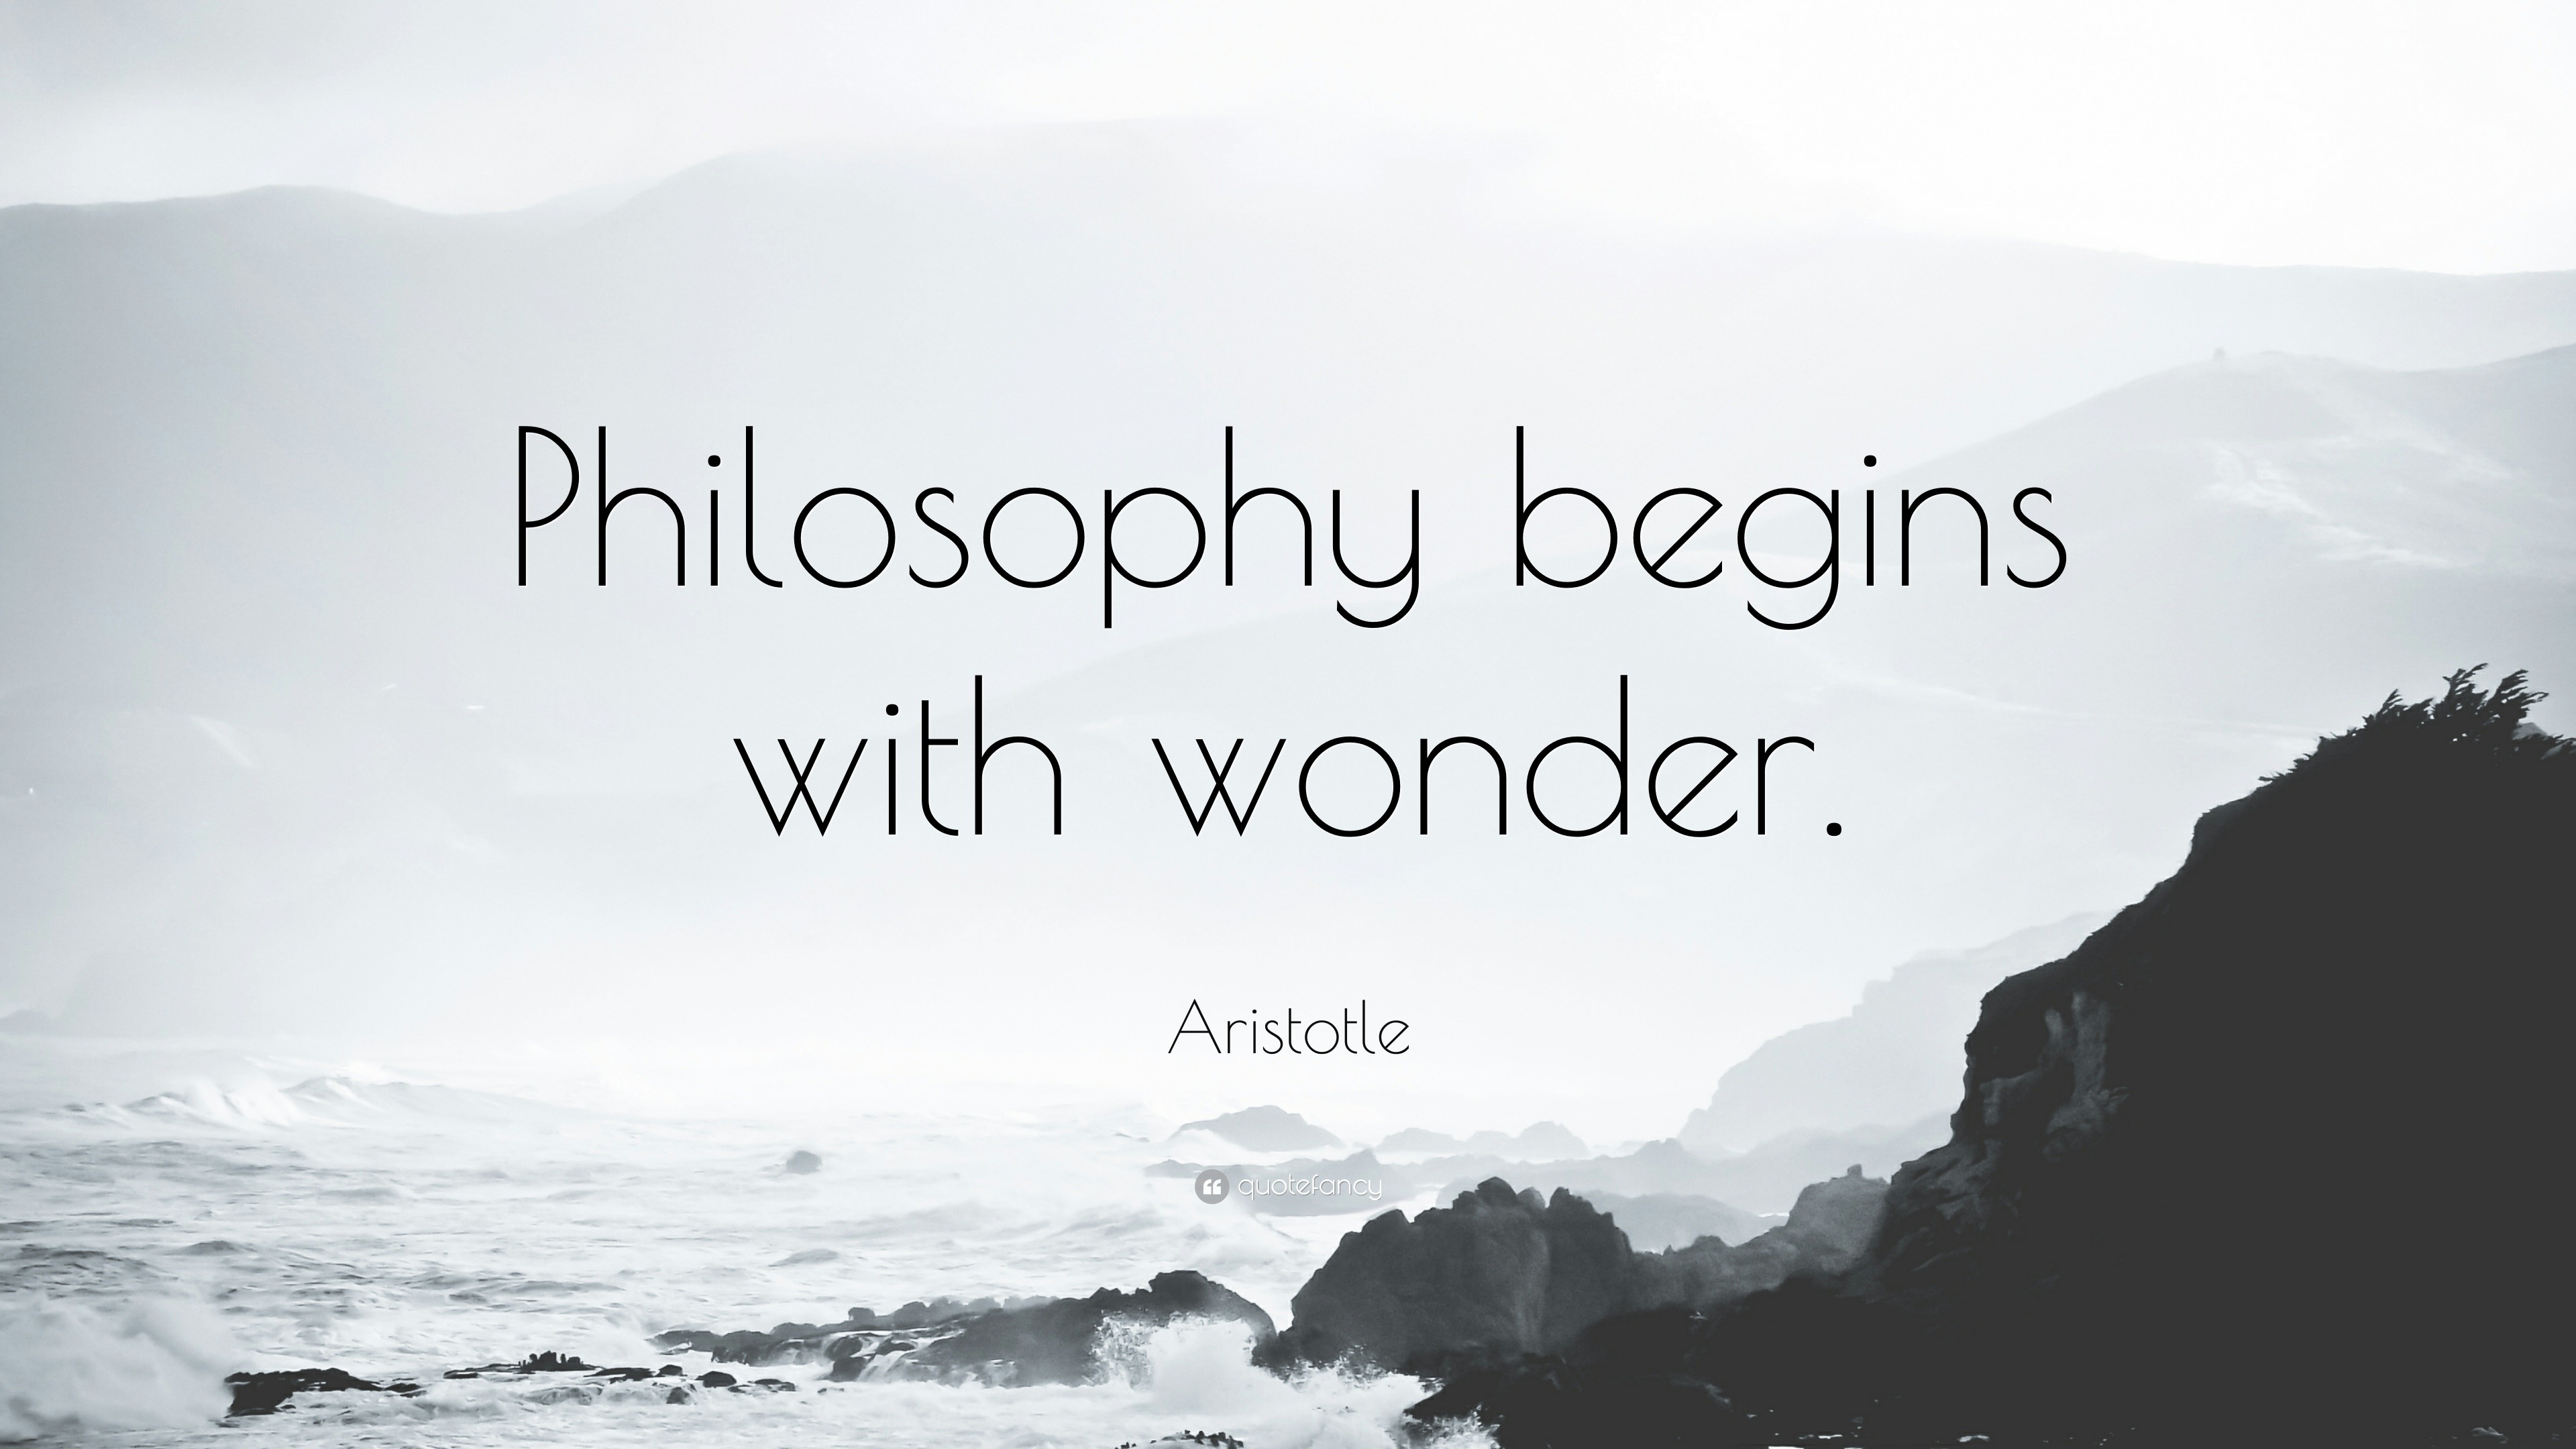 Aristotle Quote: "Philosophy begins with wonder." (12 ...